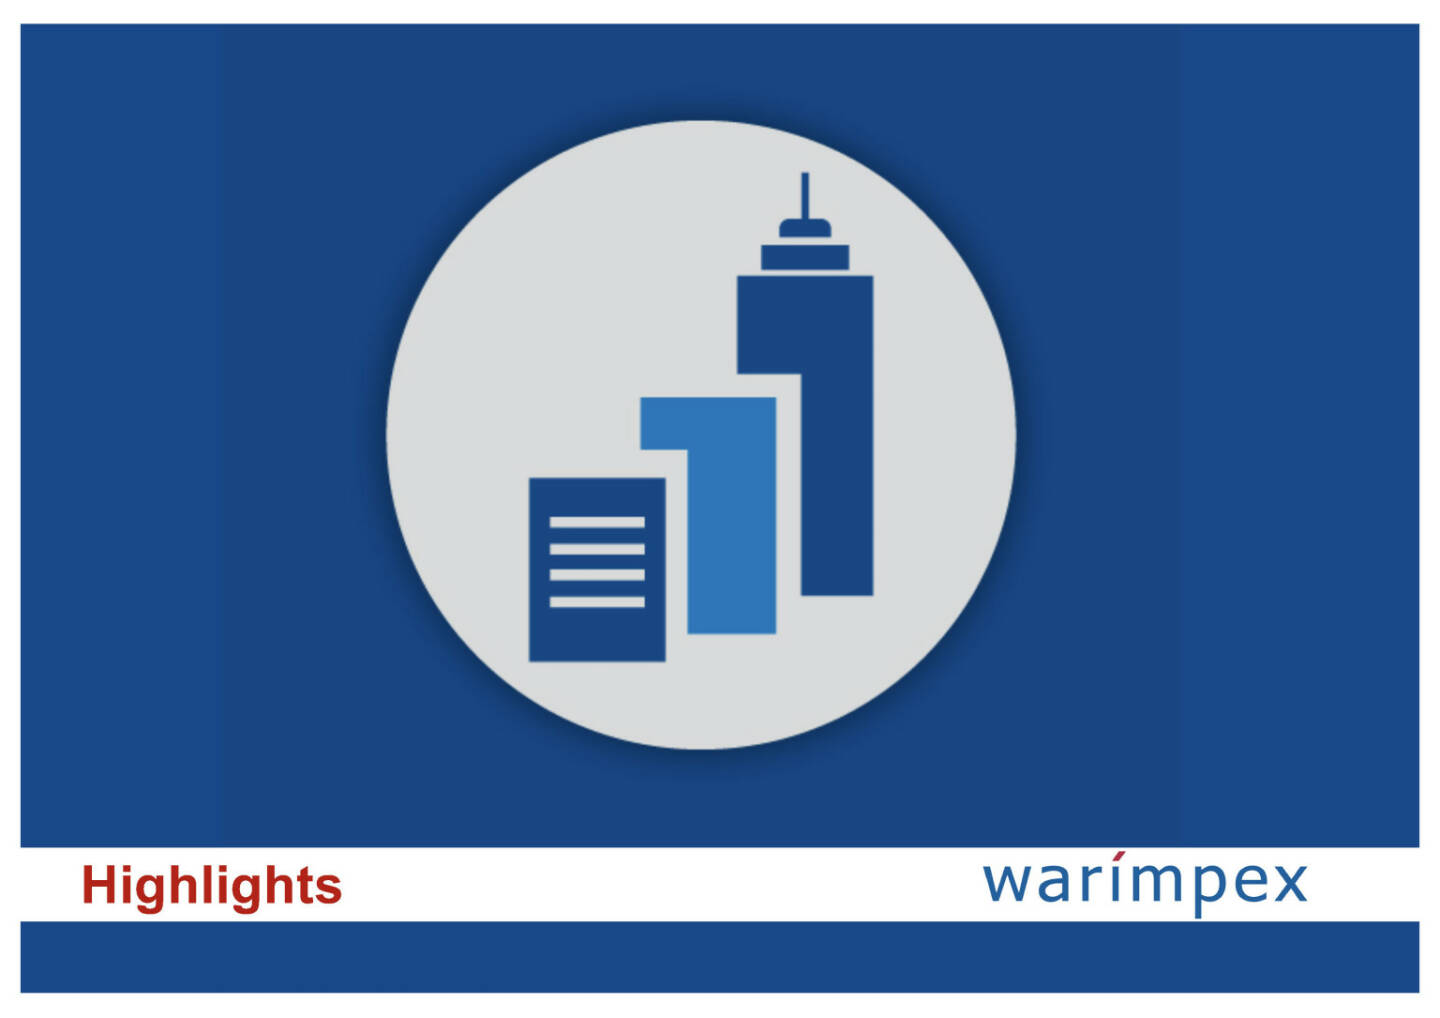 Warimpex - Highlights